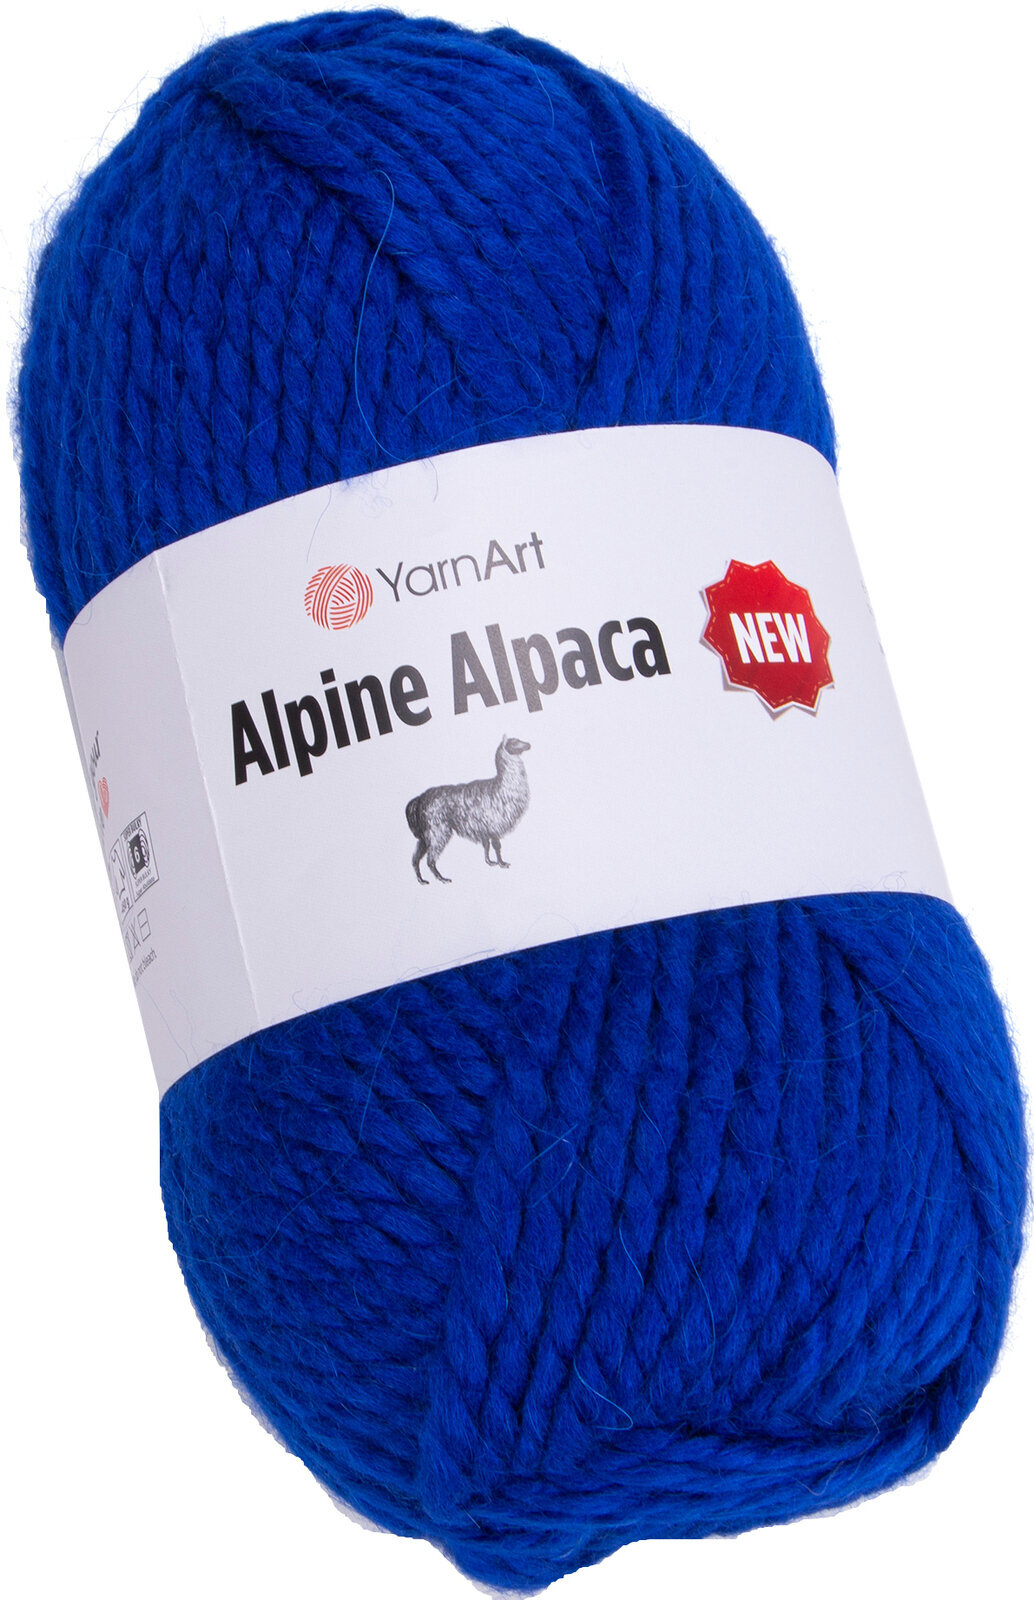 Strickgarn Yarn Art Alpine Alpaca New 1442